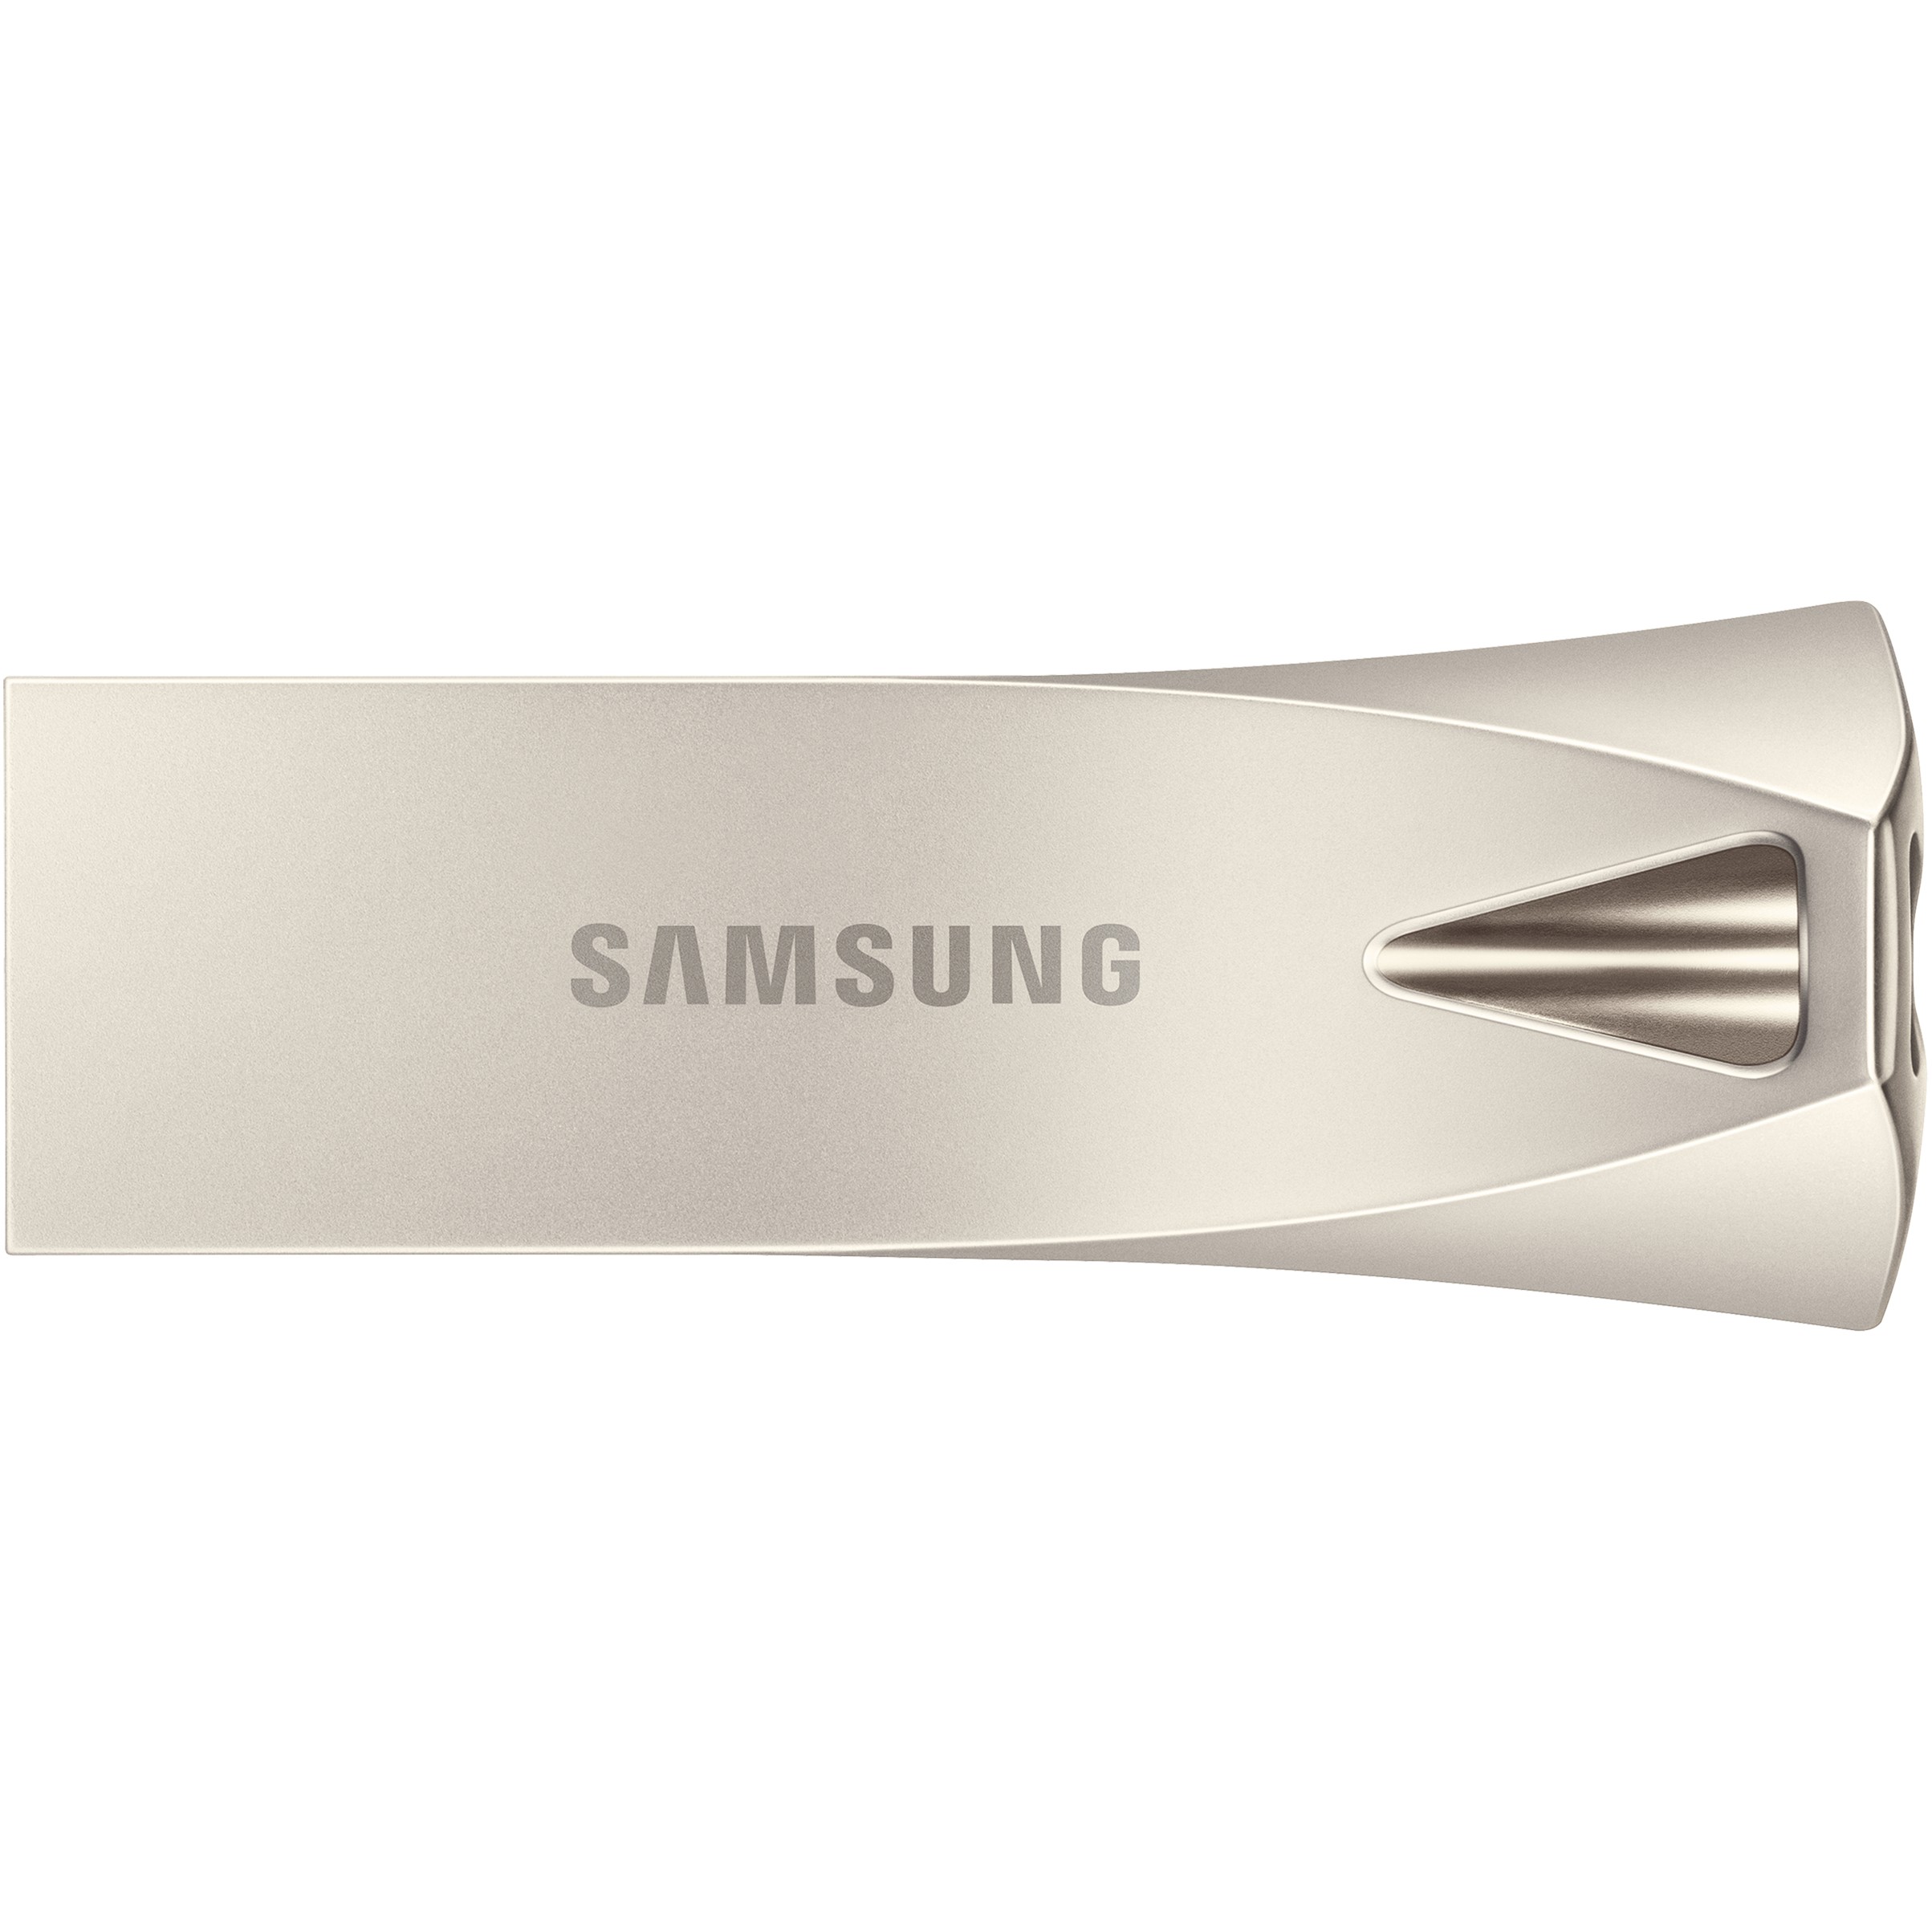 Samsung MUF-64BE USB flash drive